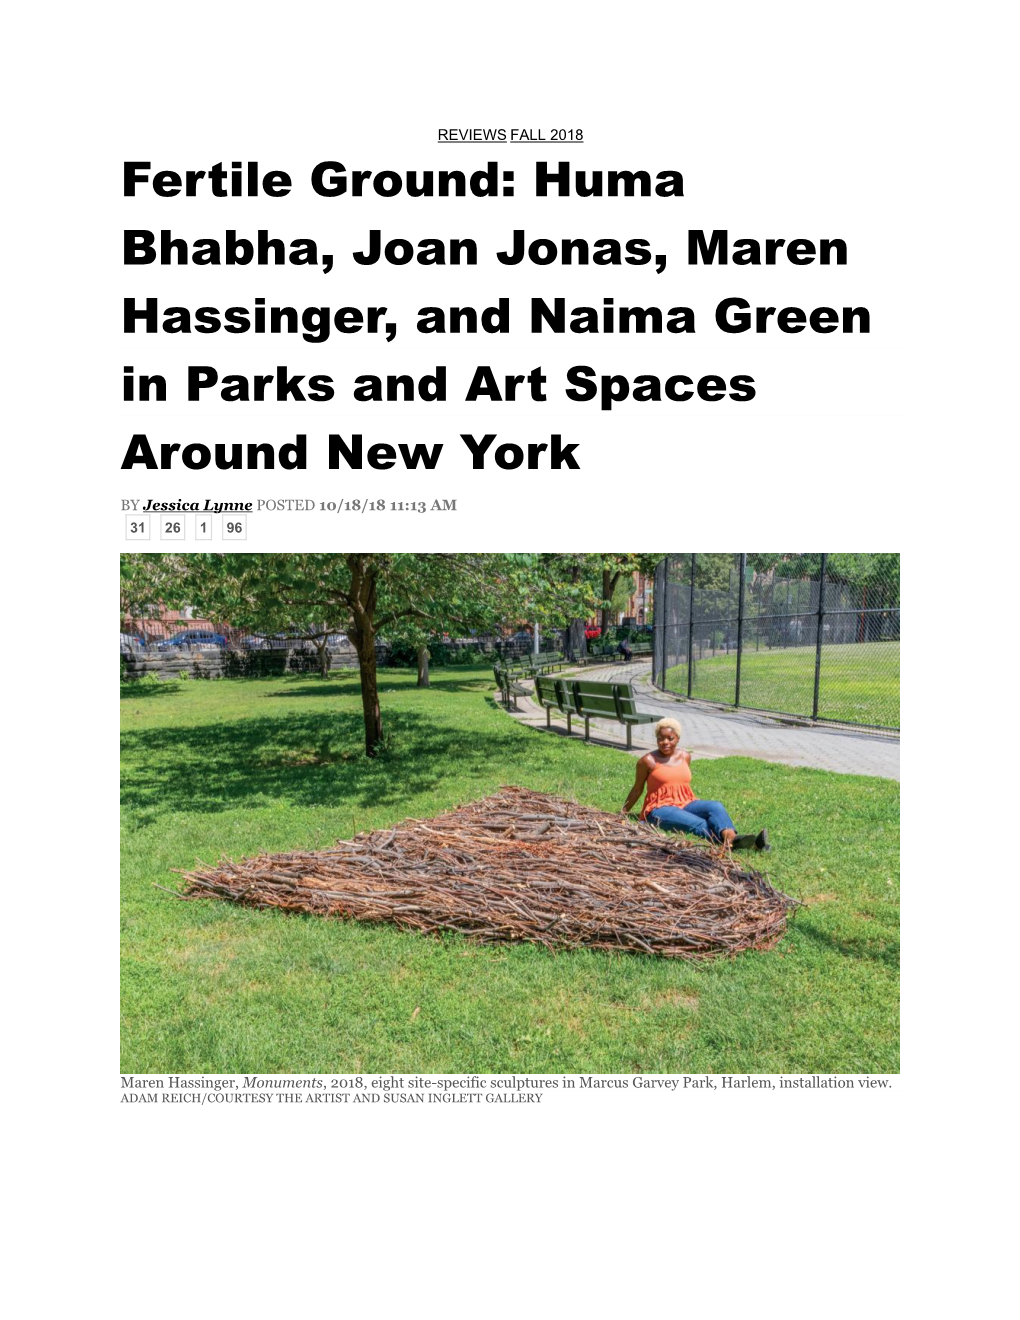 Fertile Ground: Huma Bhabha, Joan Jonas, Maren Hassinger, and Naima Green in Parks and Art Spaces Around New York